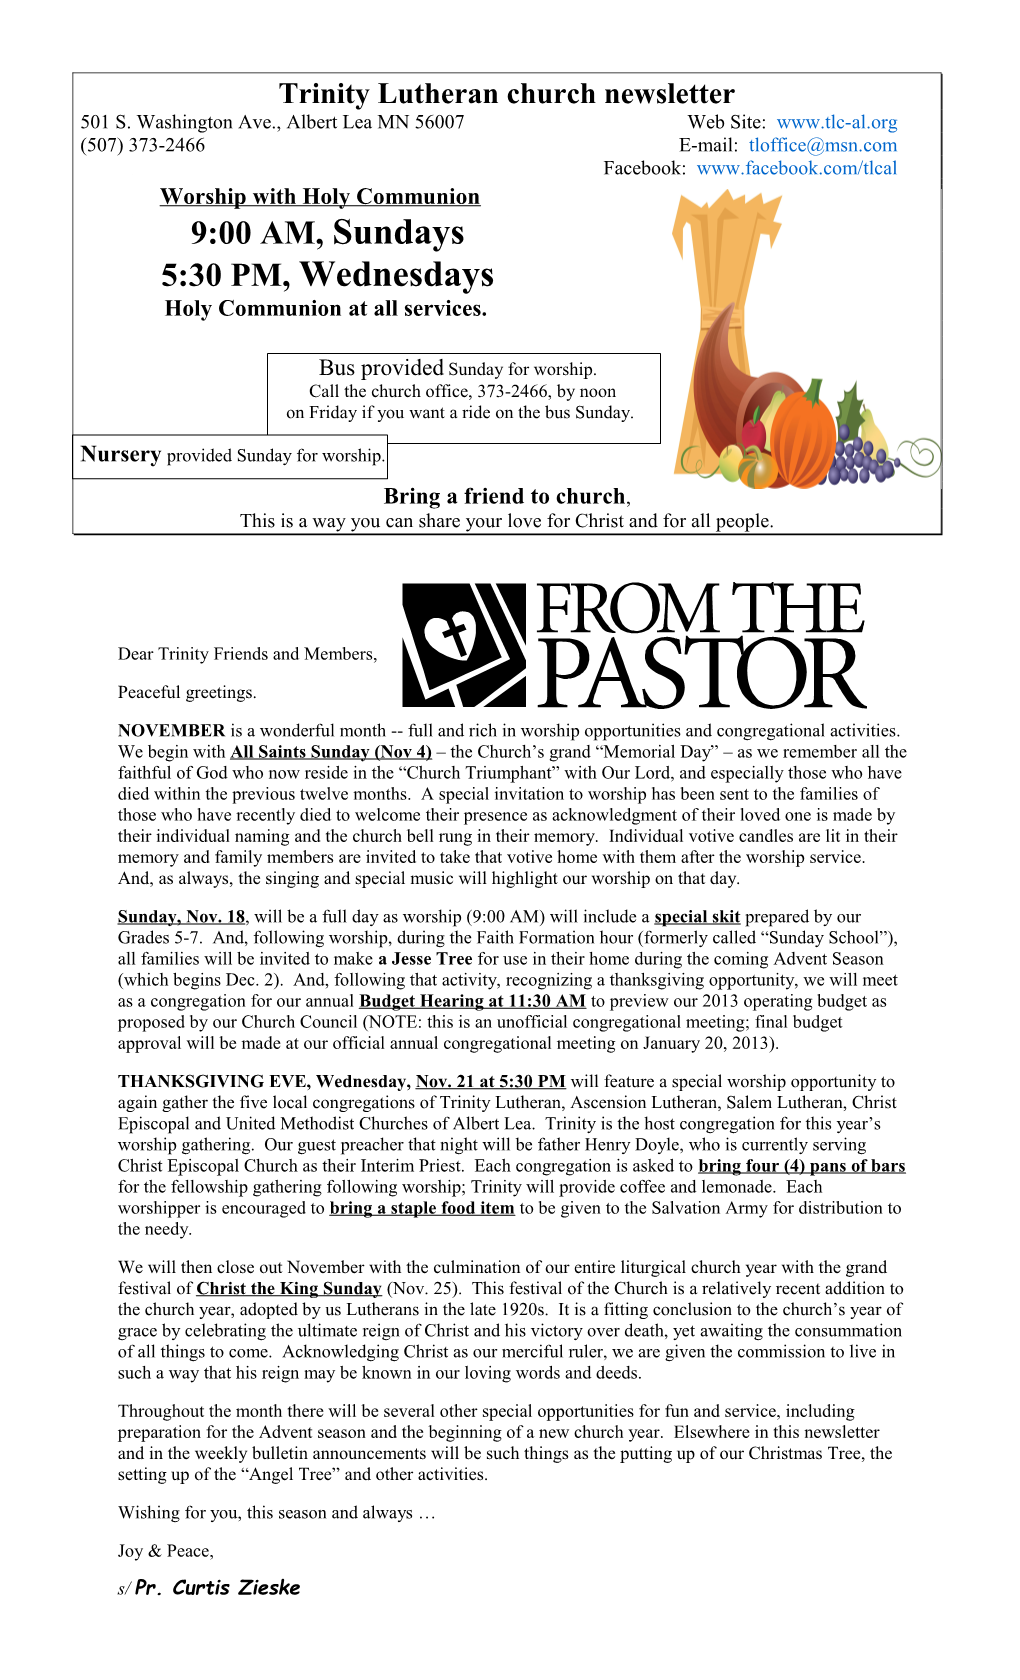 Trinity Lutheran Church Newsletter